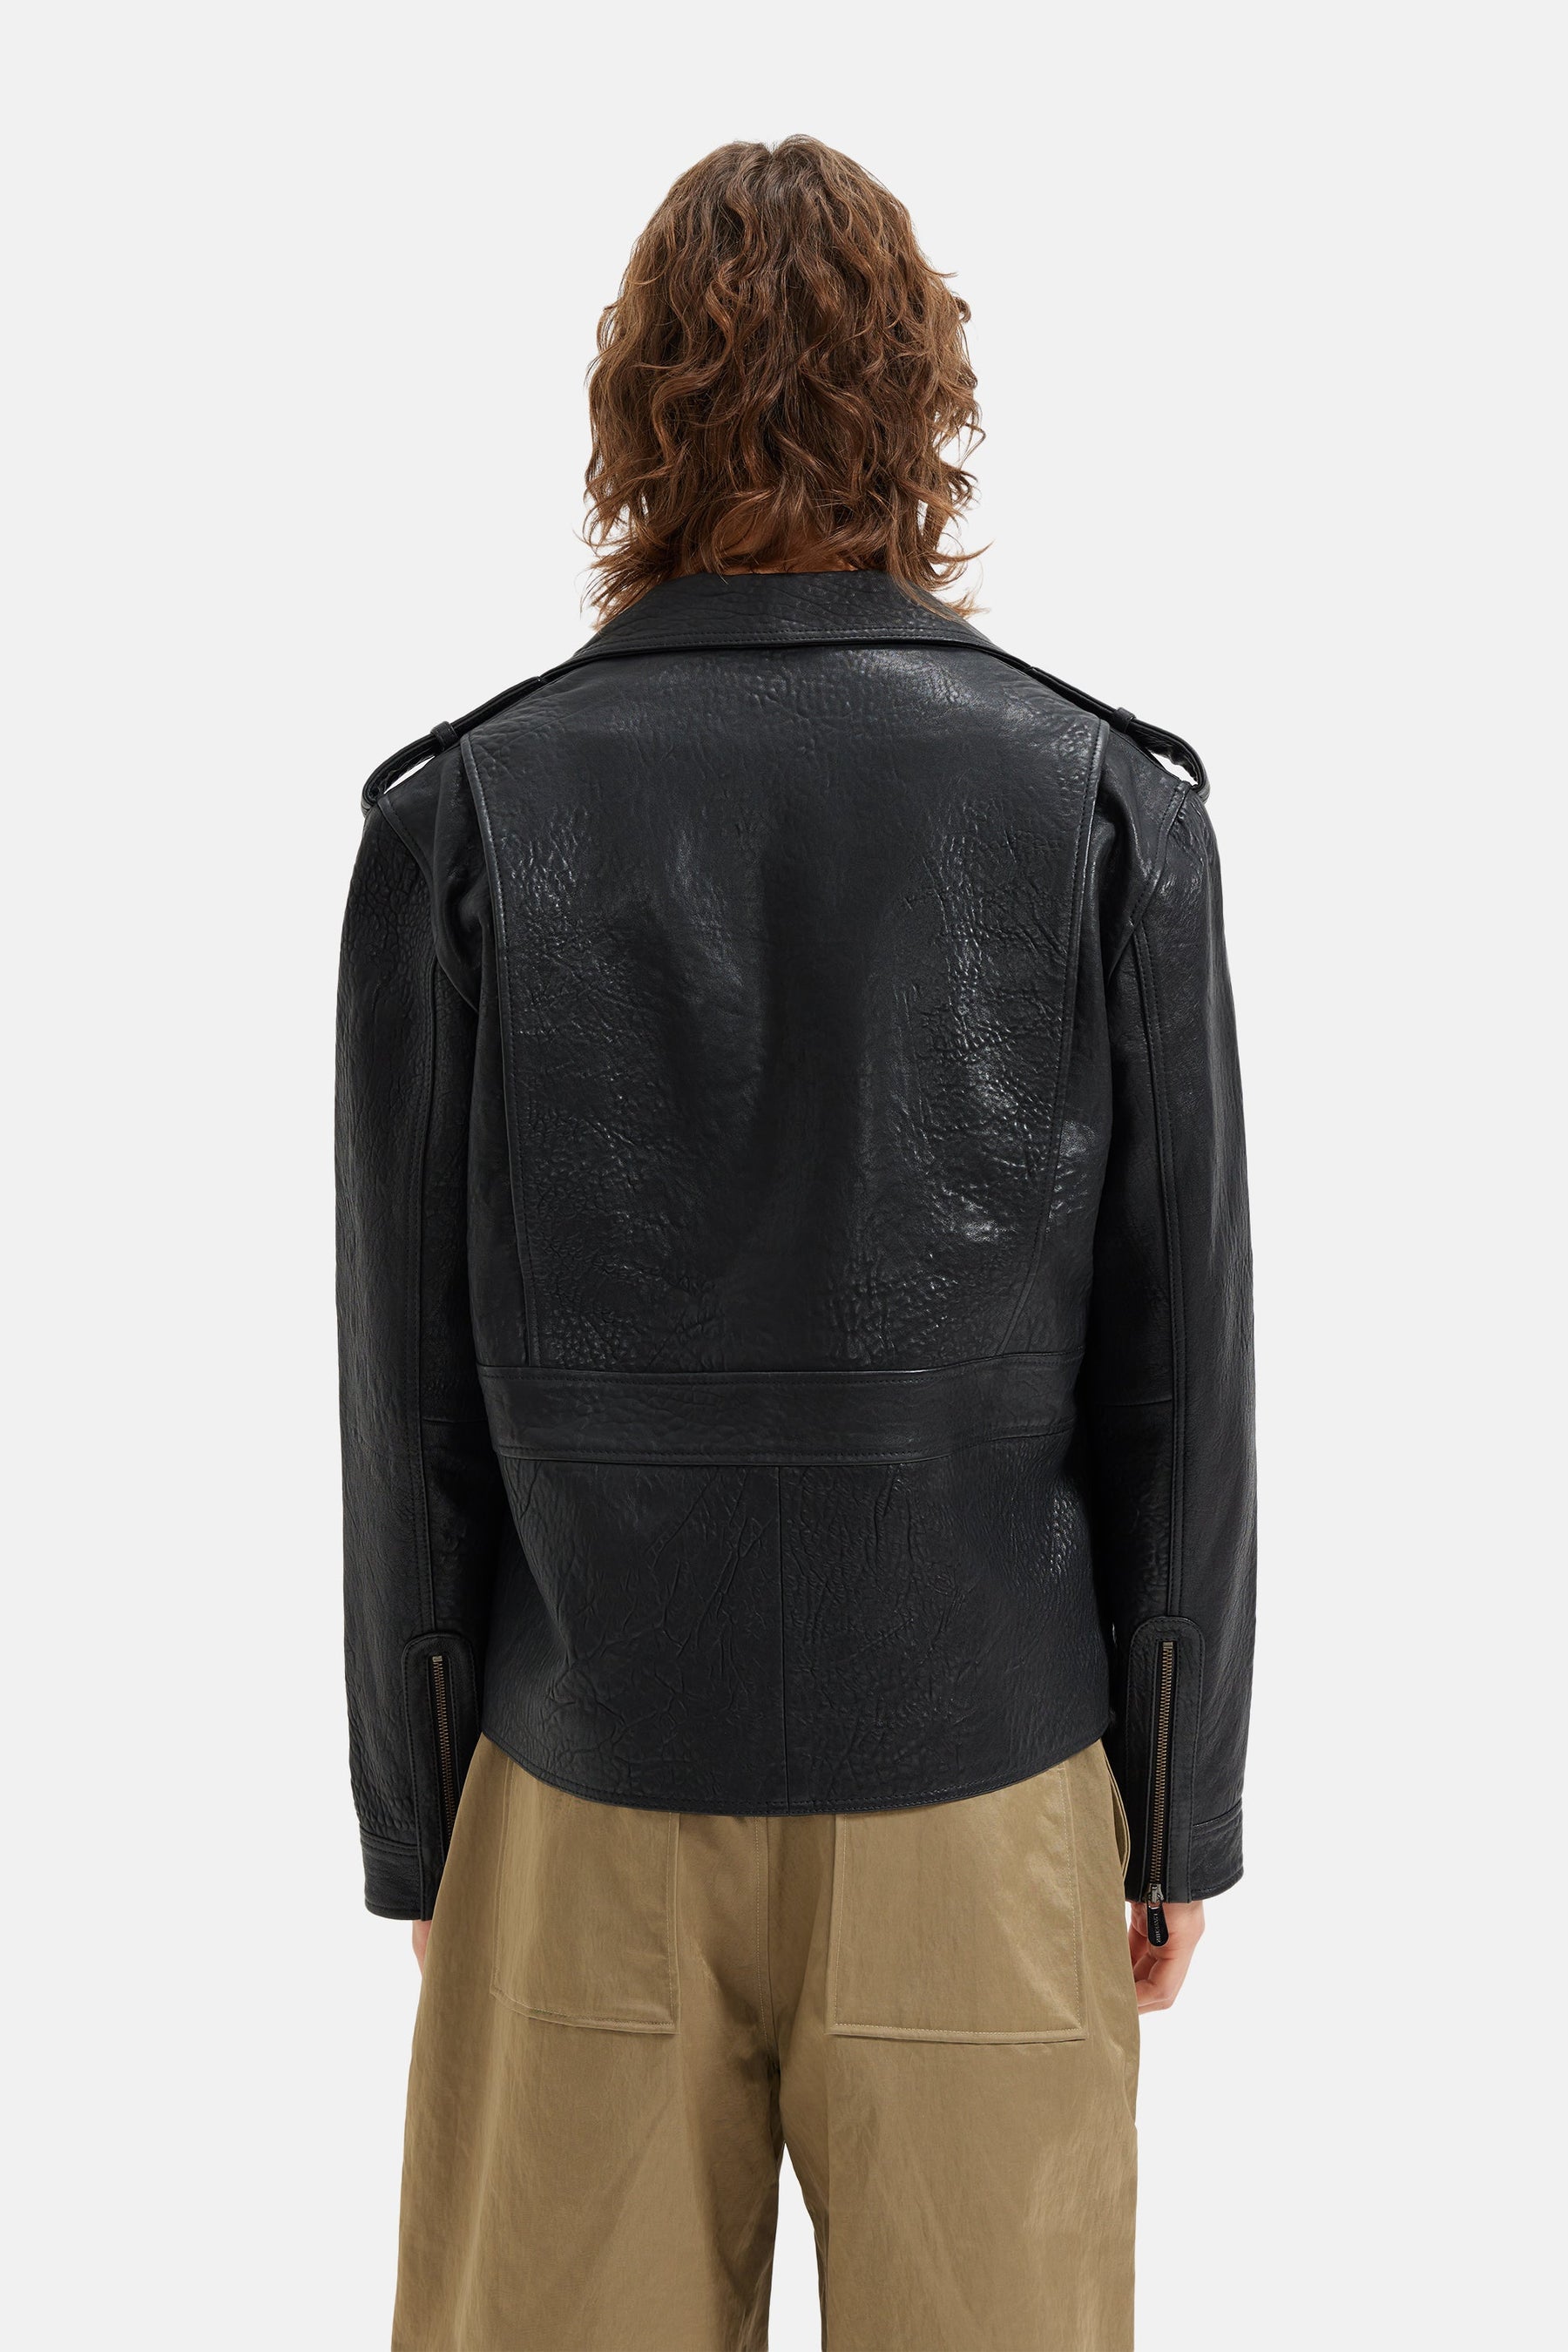 Klas - Leather Biker Jacket - Black